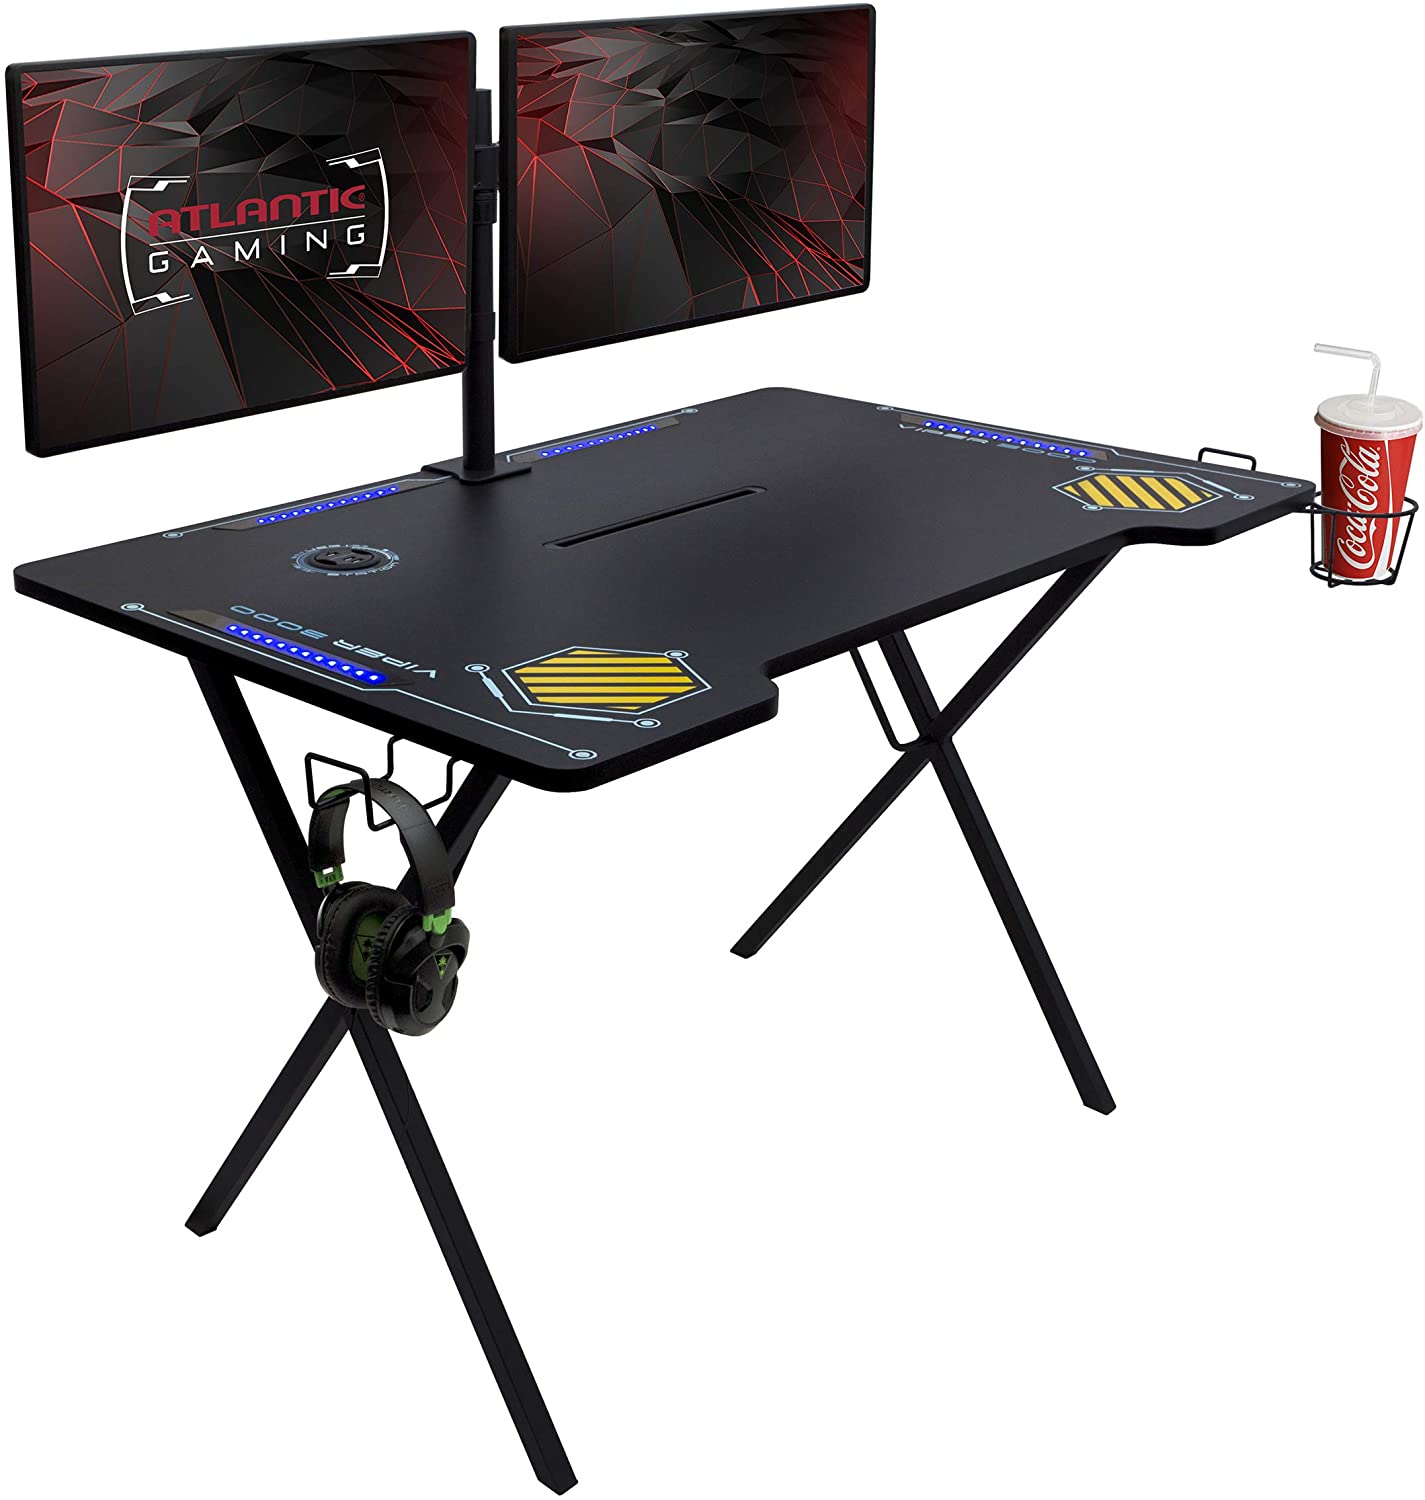 Atlantic Viper 3000 Gaming Desk w/ LED Lights $70.91 + Free Shipping